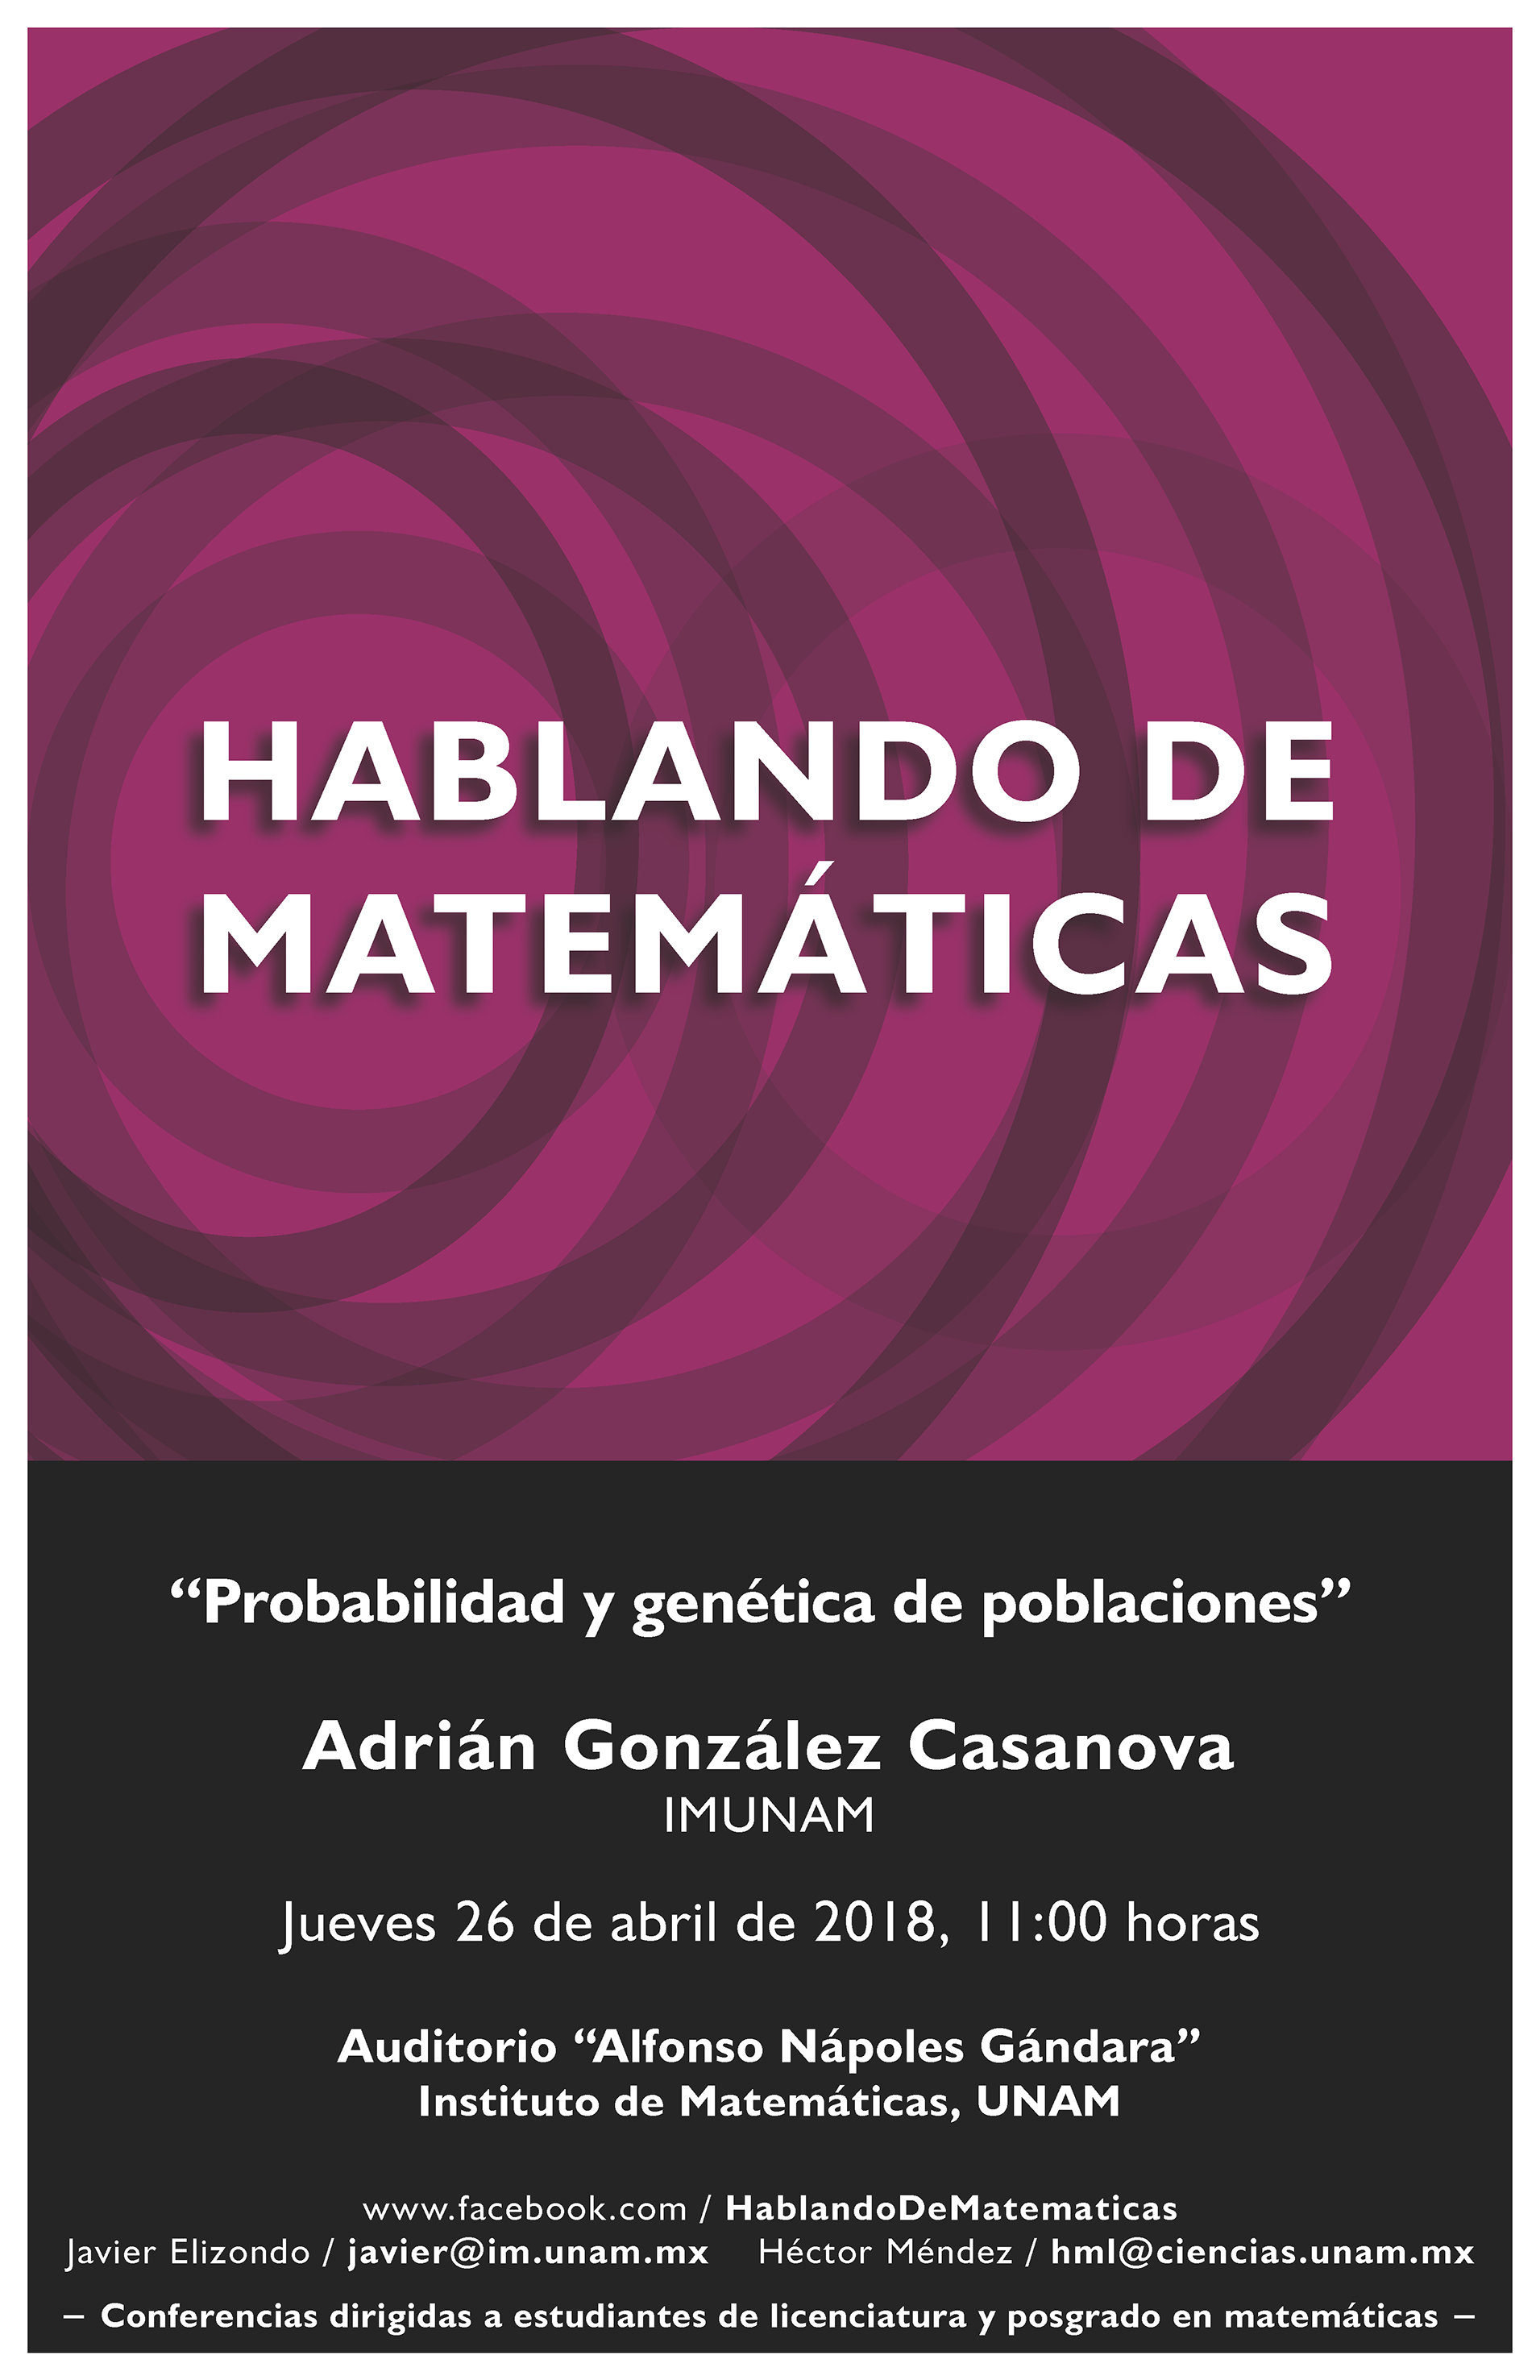 Hablando de Matemáticas: Adrián González Casanova, IMUNAM - C.U.